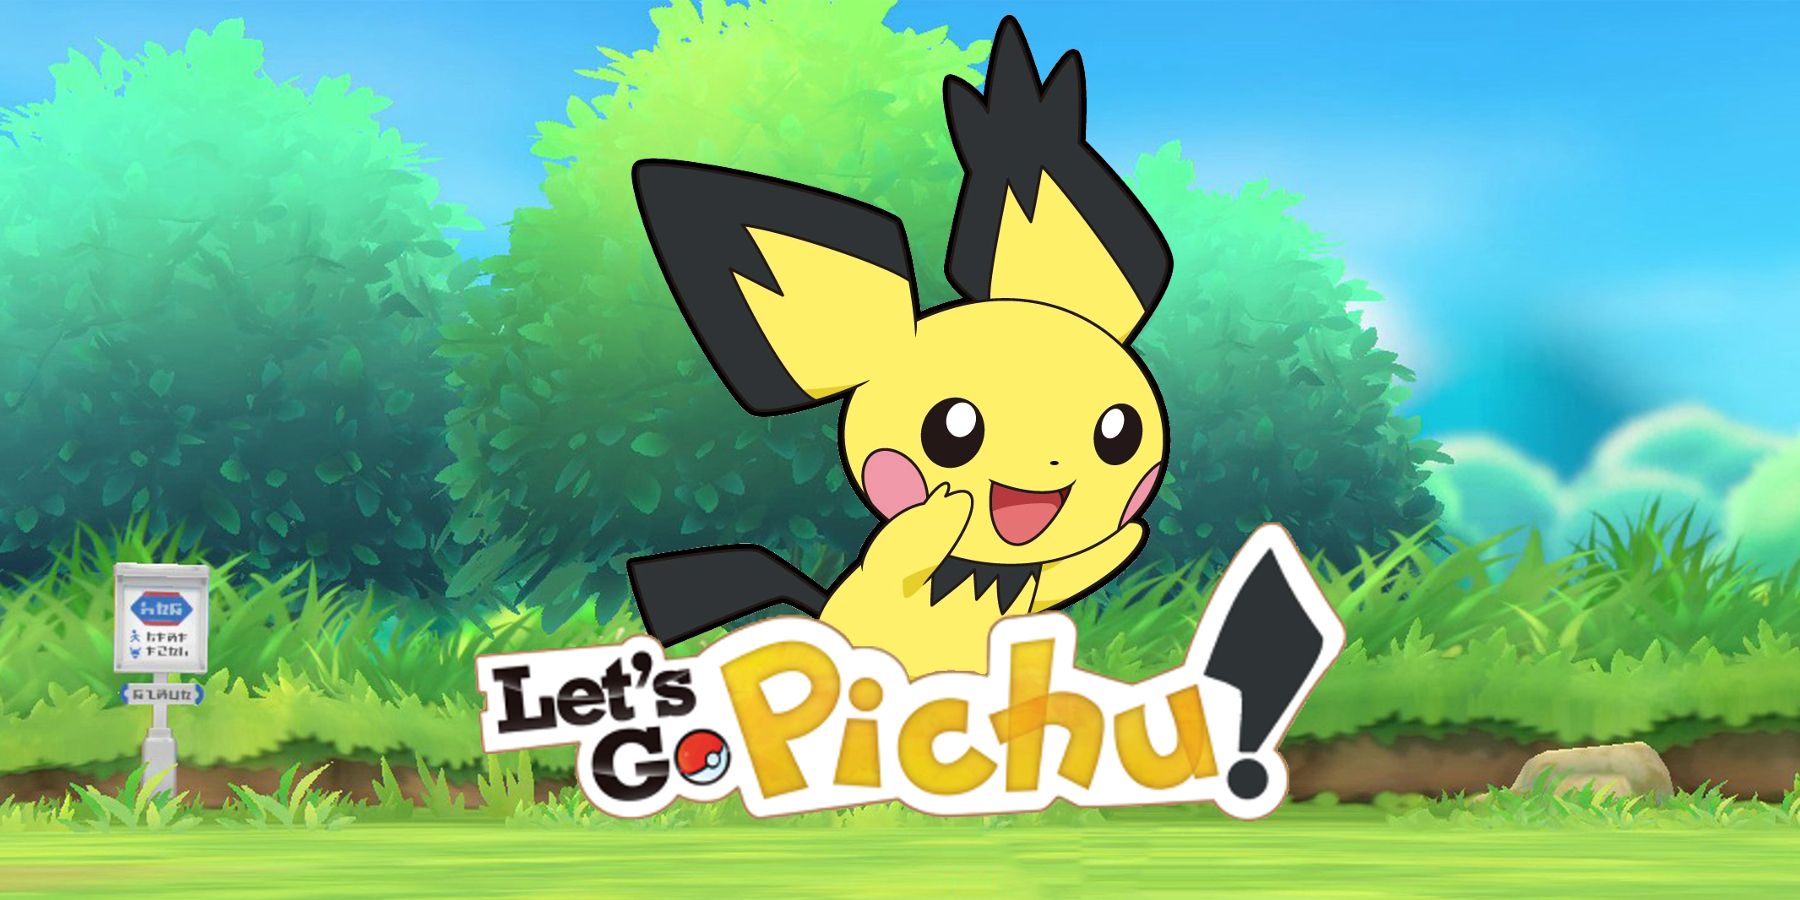 Mock up logo for Let's Go Pichu sequel